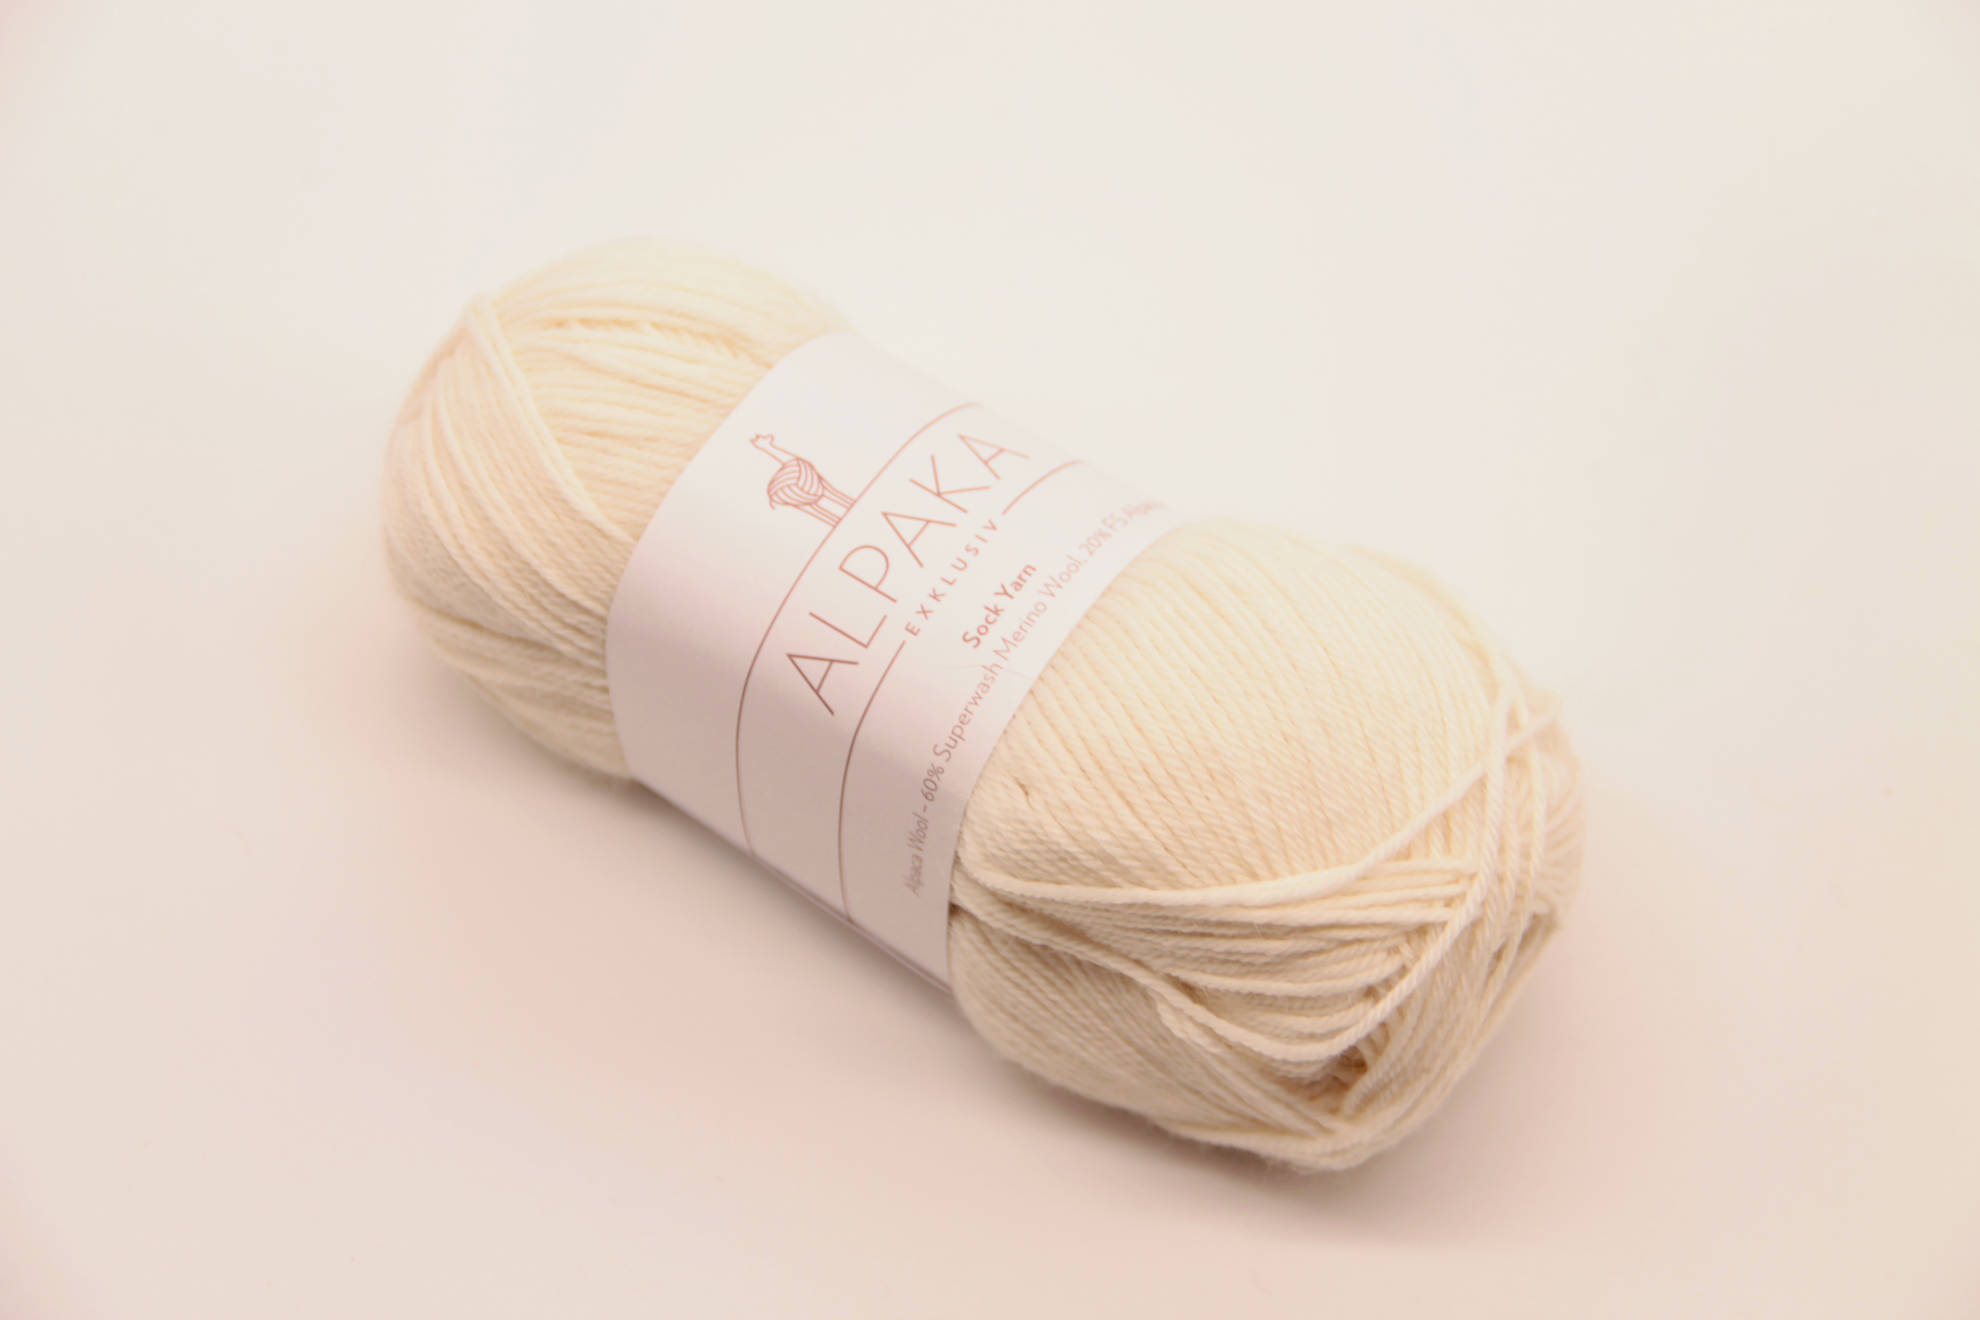 Wolle - Sock Yarn, div. Farben